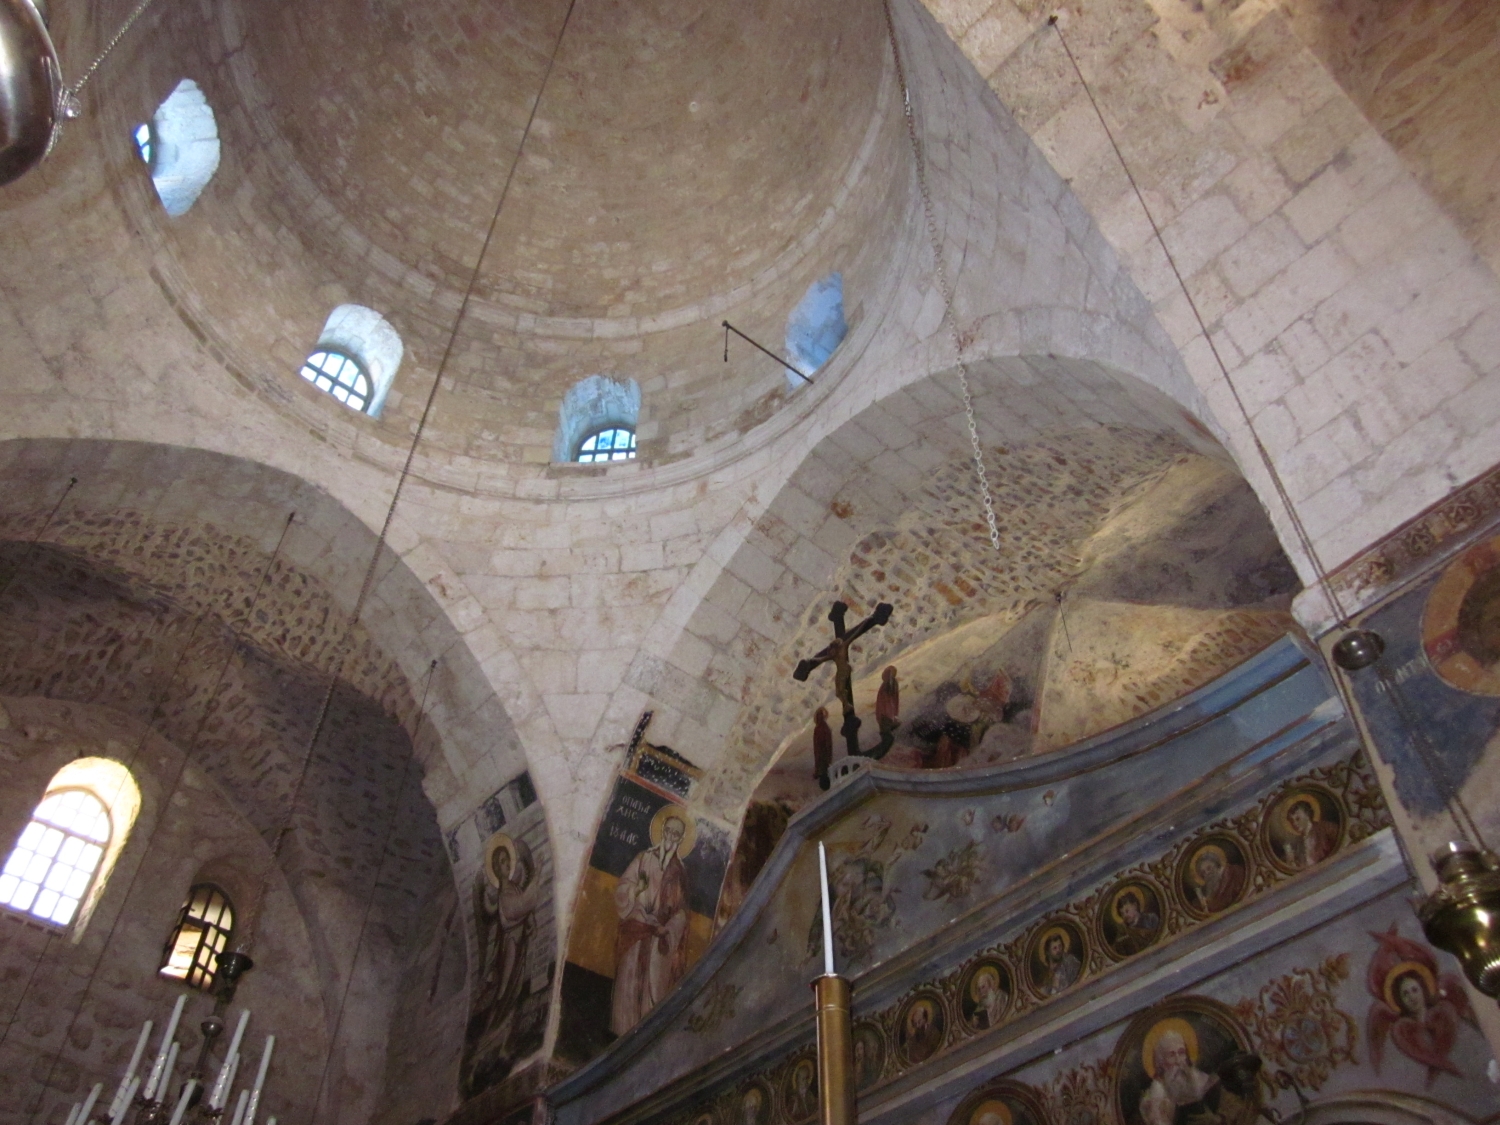 Interior, upwards view to dome